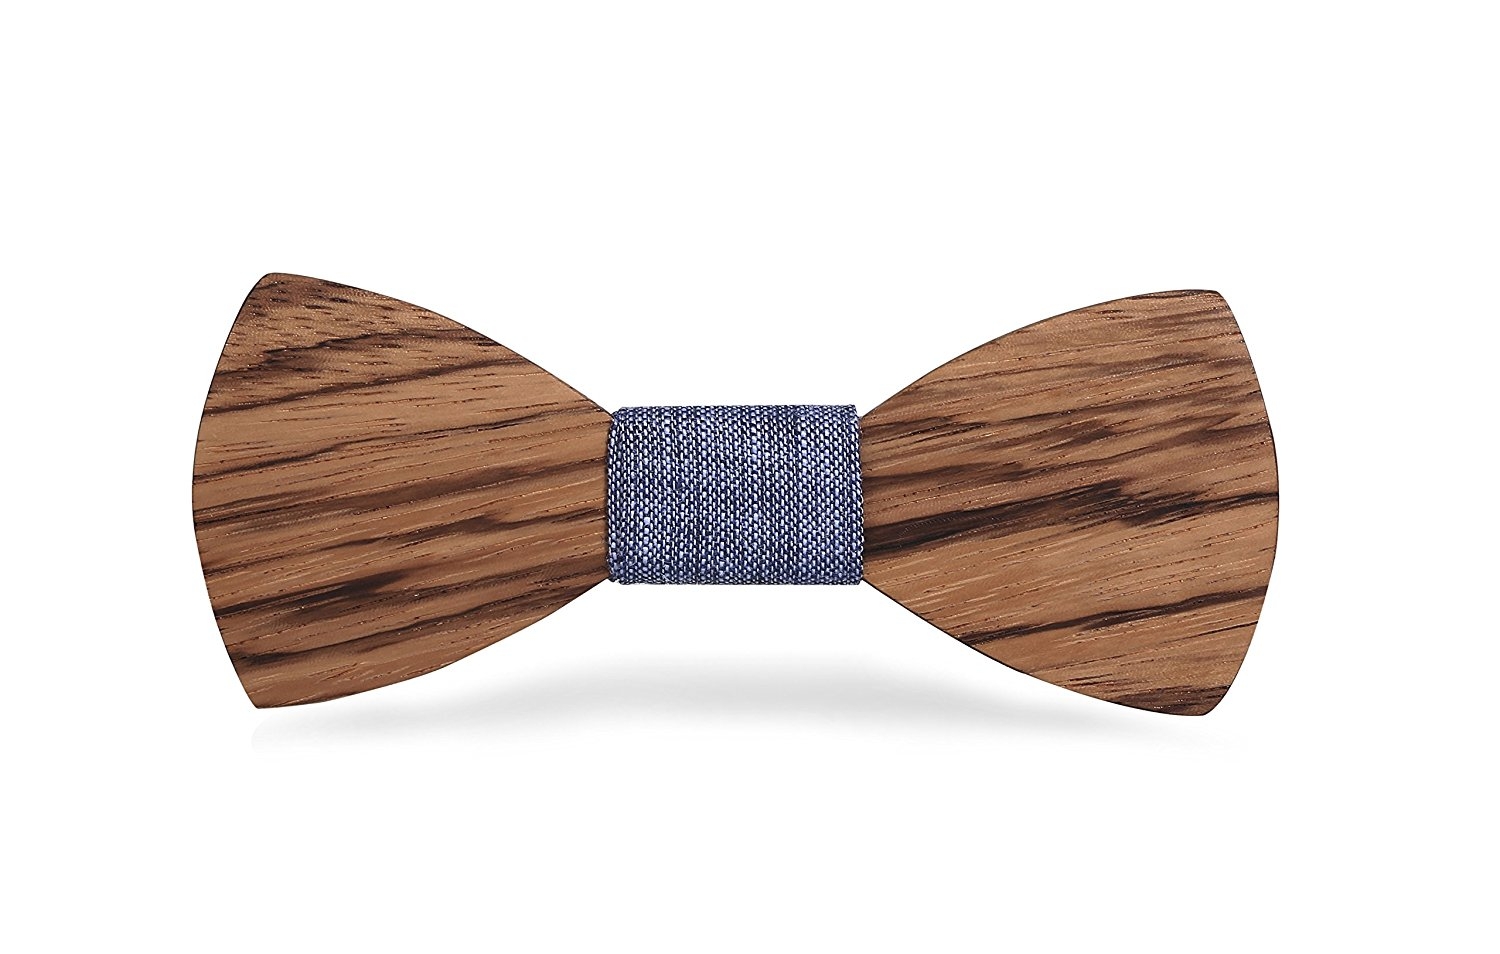 Handmade Customized Solid Wood Bow Tie Best Offer iNeedTheBestOffer.com ...